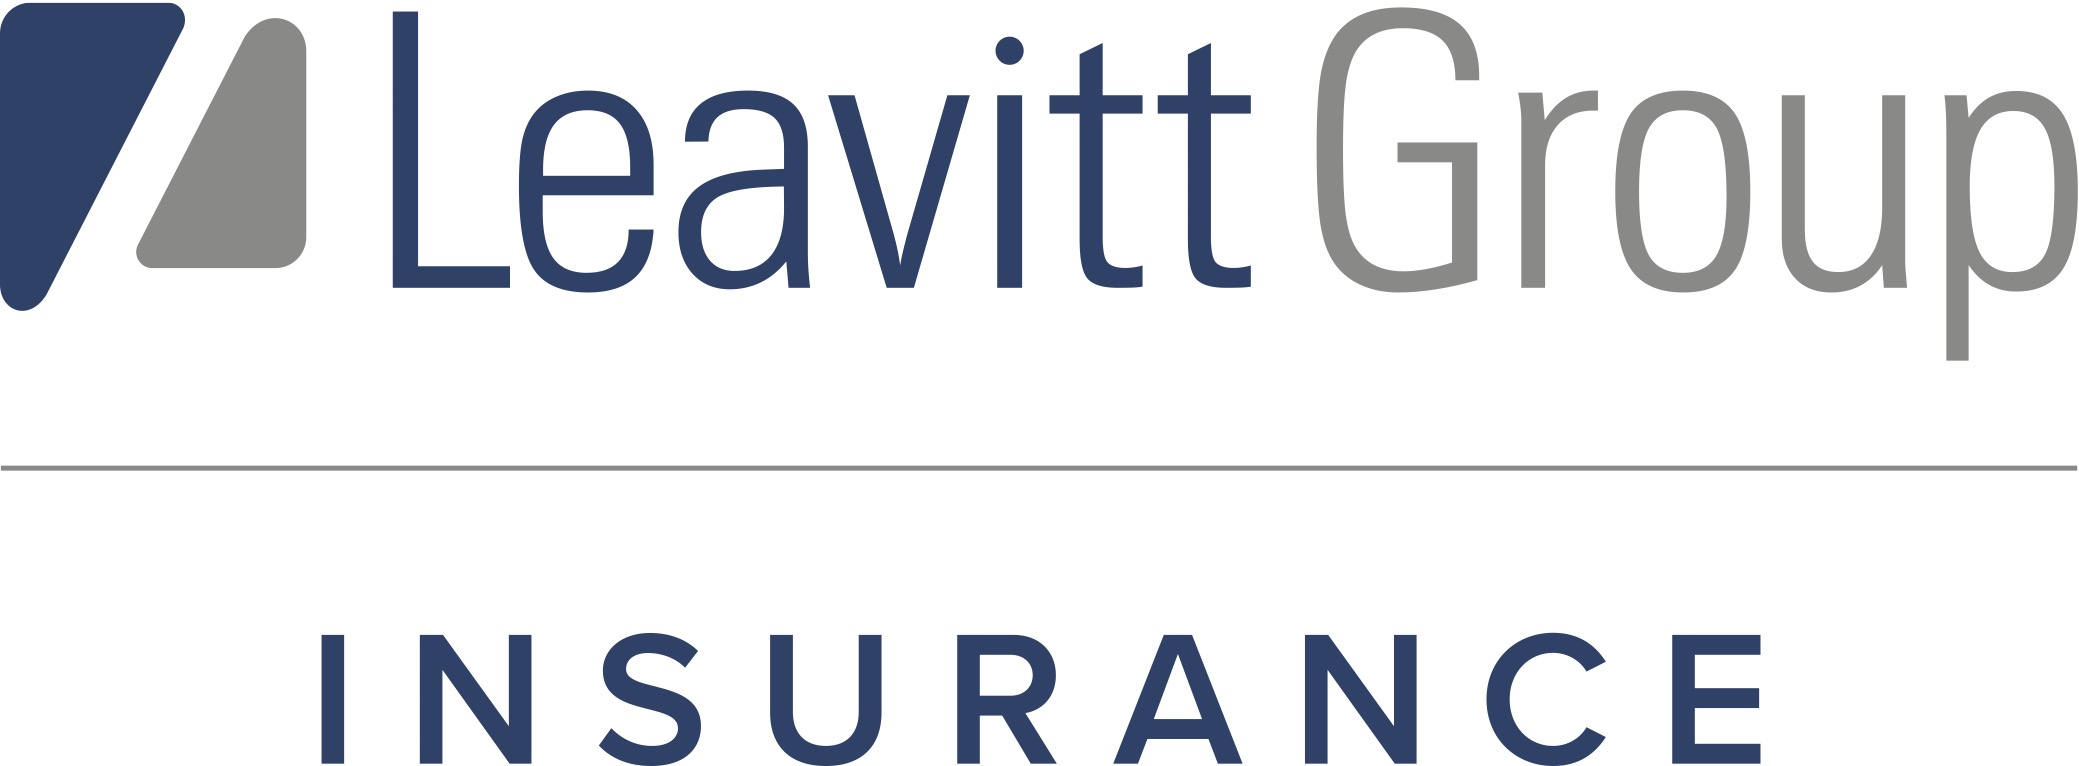 Leavitt Great West Insurance logo